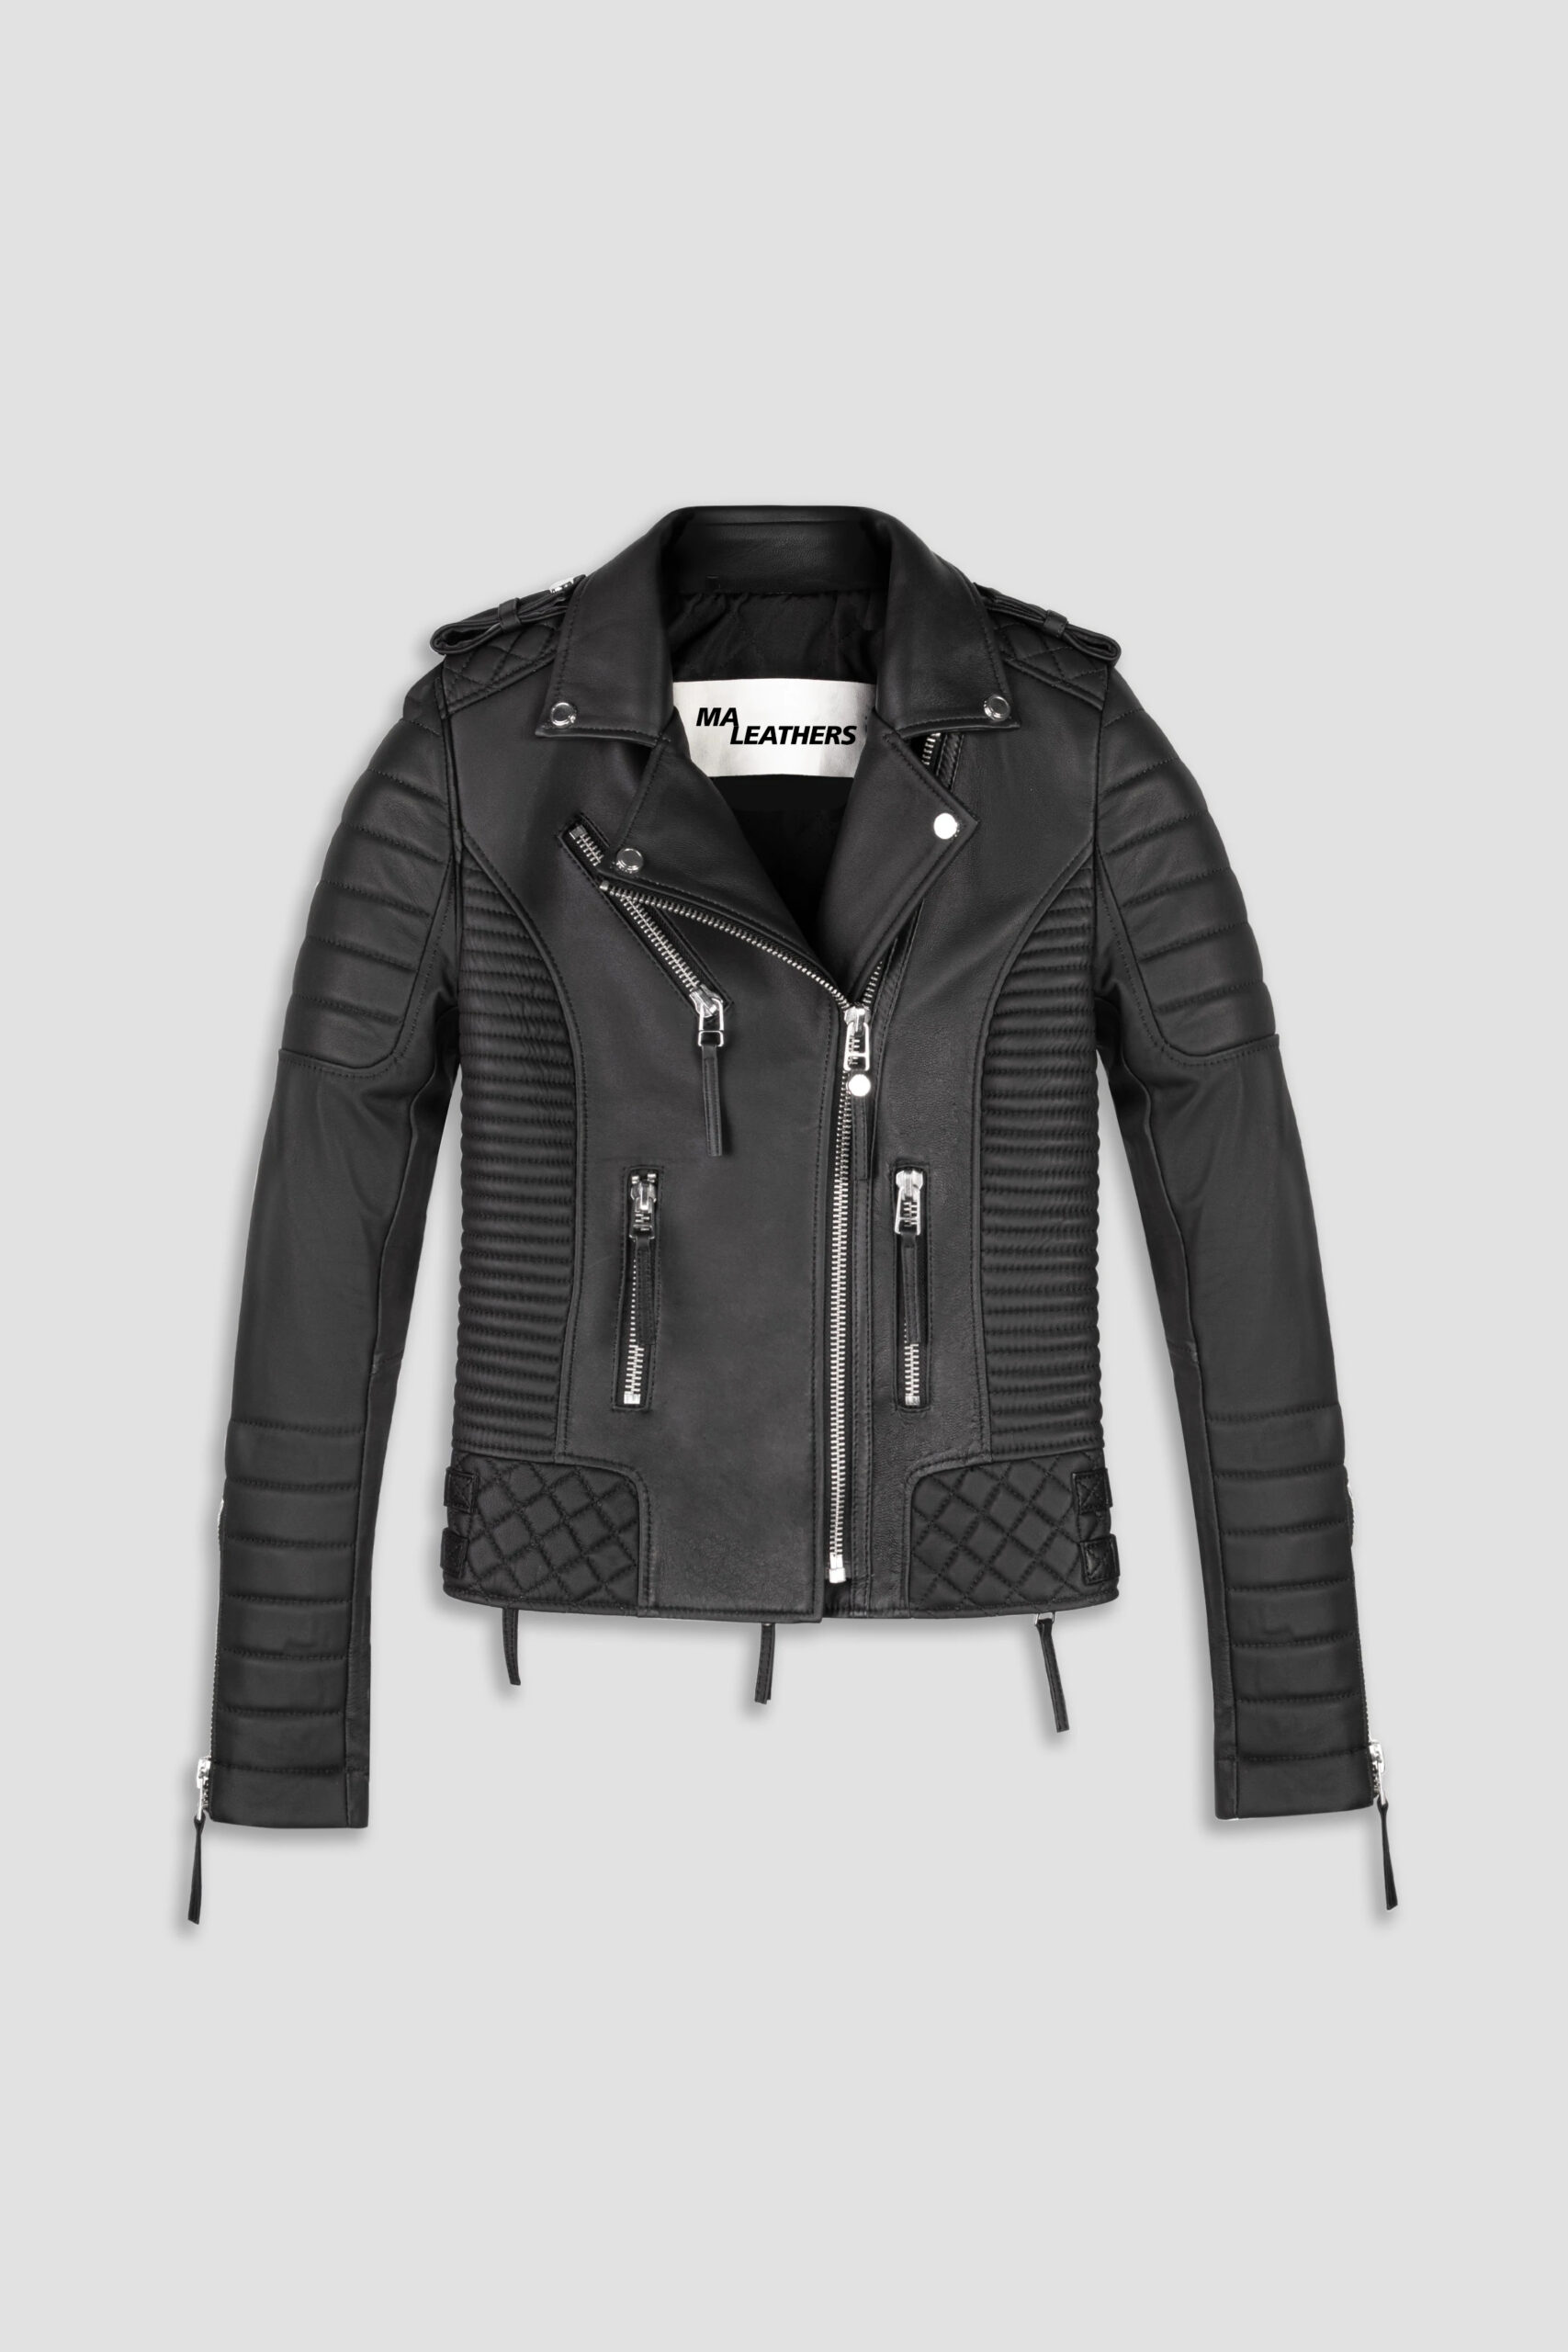 KAY MICHAELS: Bodaskin Women Leather Jacket - MA Leathers